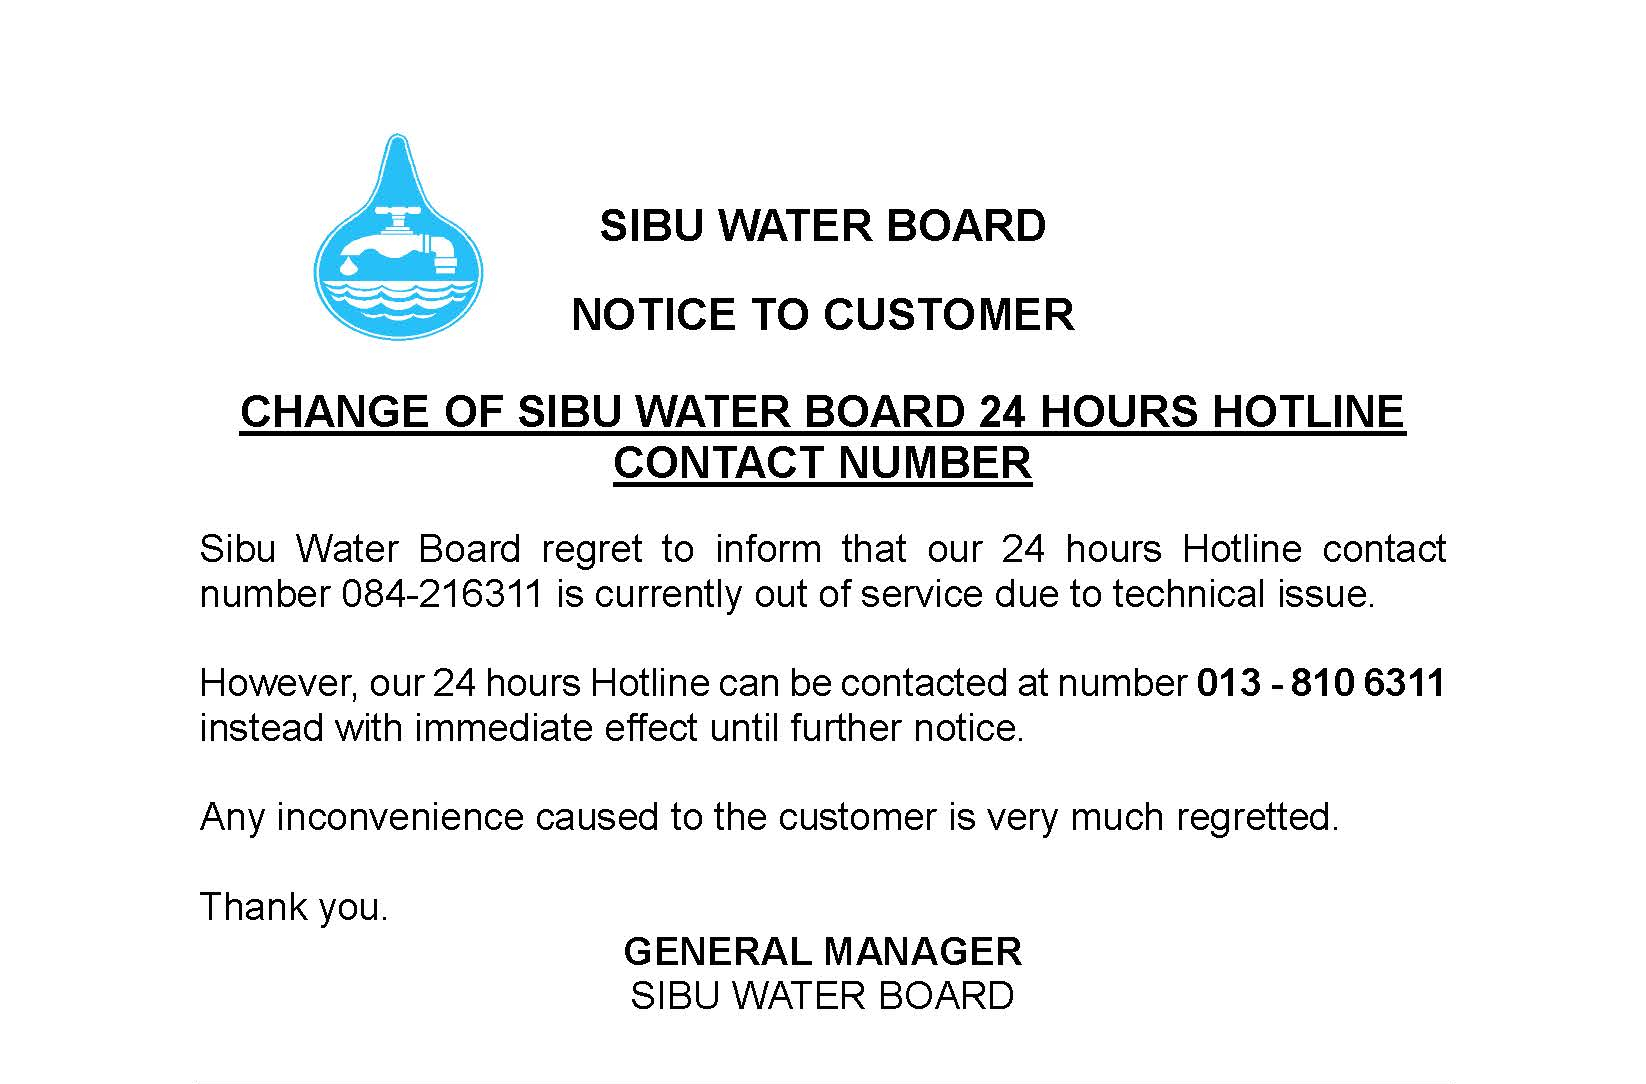 CHANGE OF SIBU WATER BOARD 24 HOURS HOTLINE CONTACT NUMBER